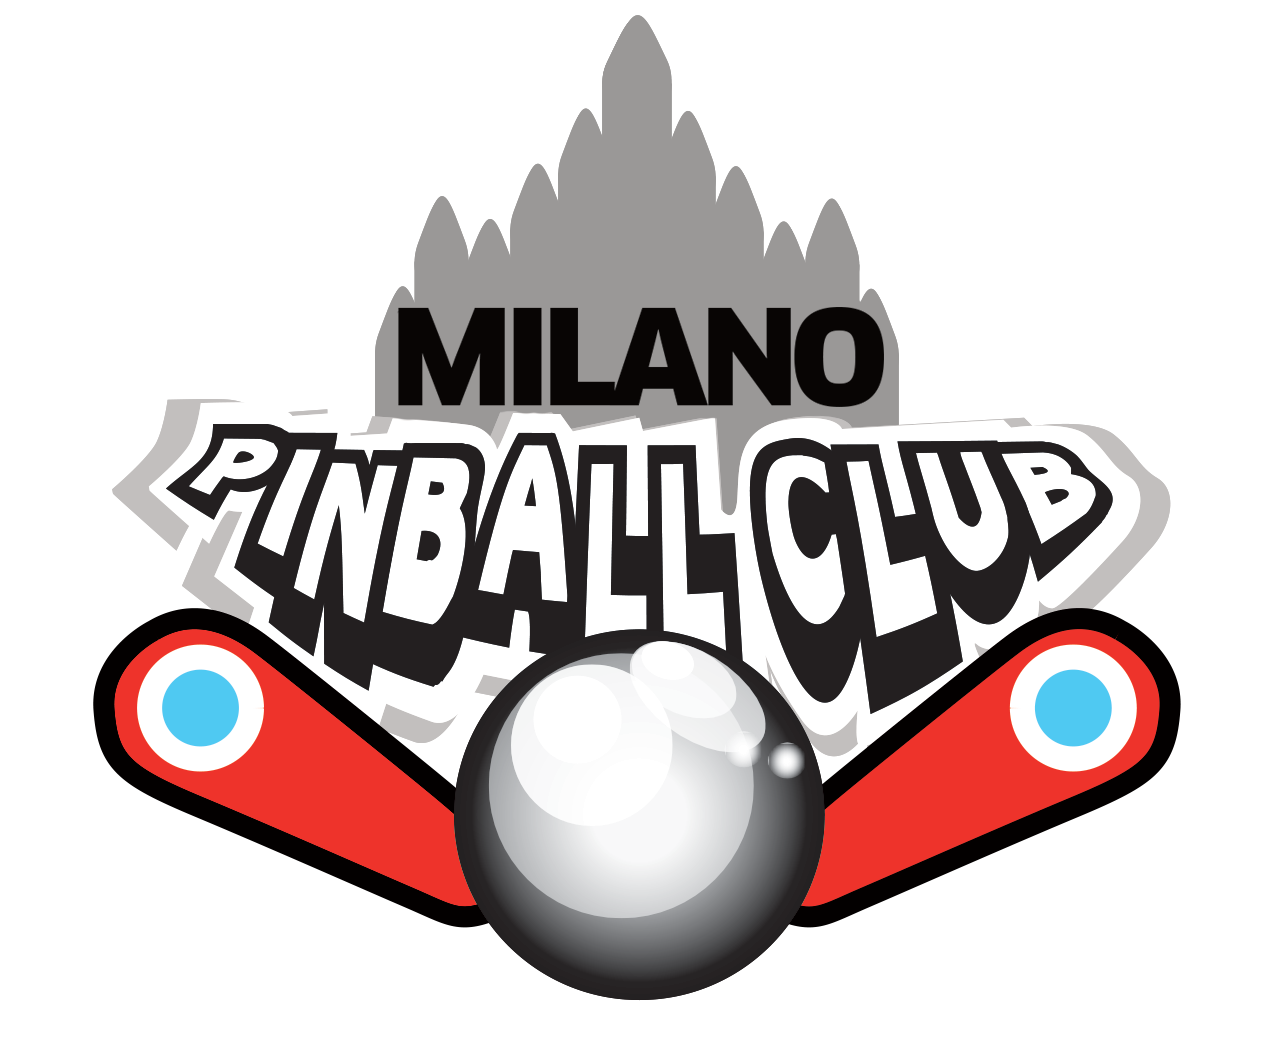 MILANO PINBALL CLUB